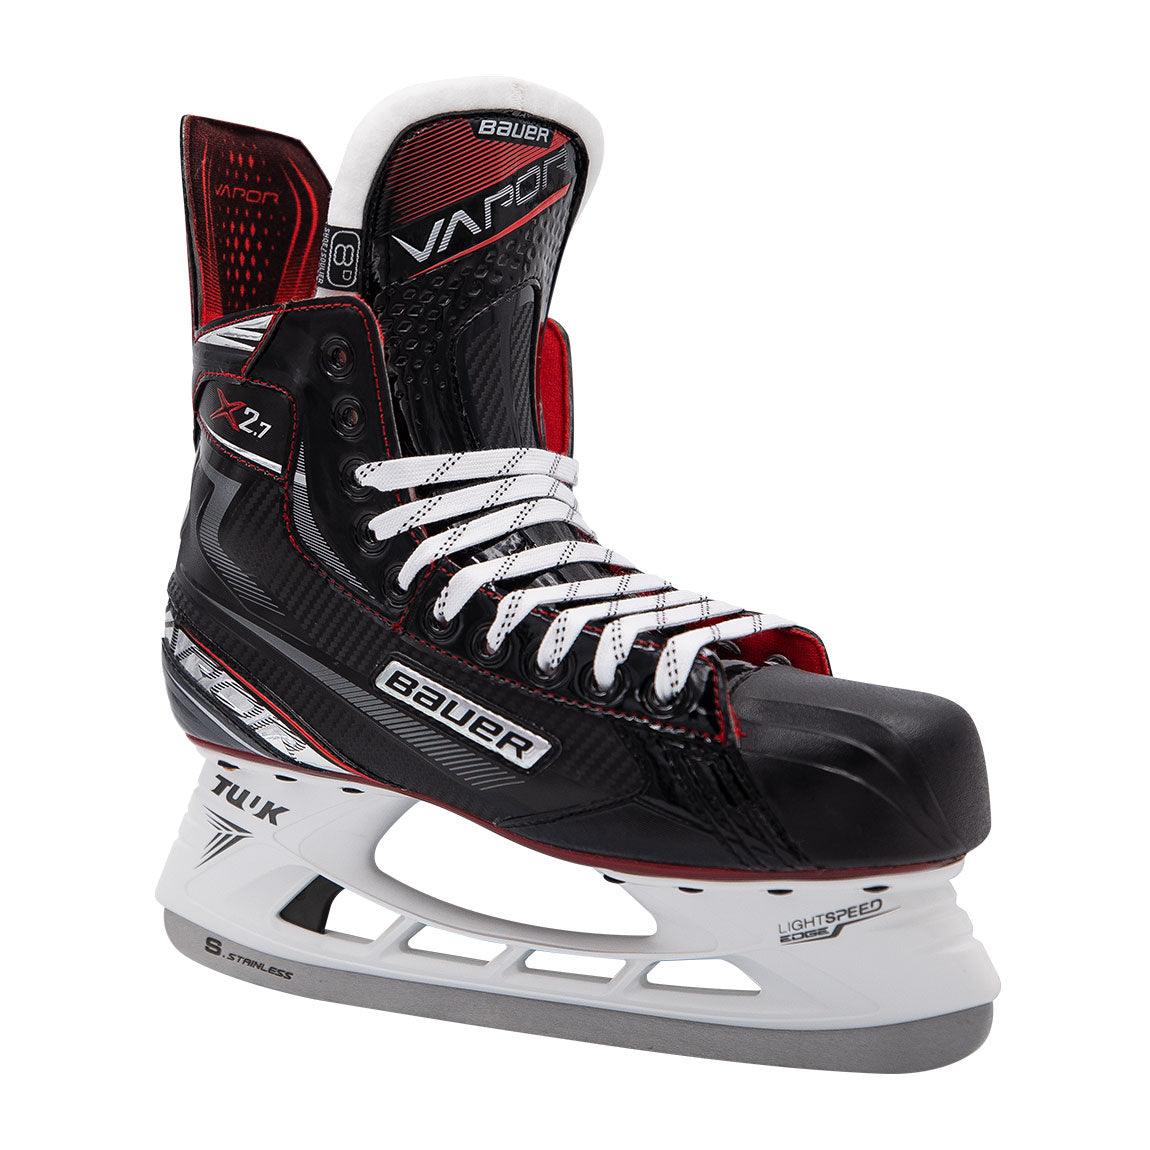 Vapor X2.7 Hockey Skates - Senior